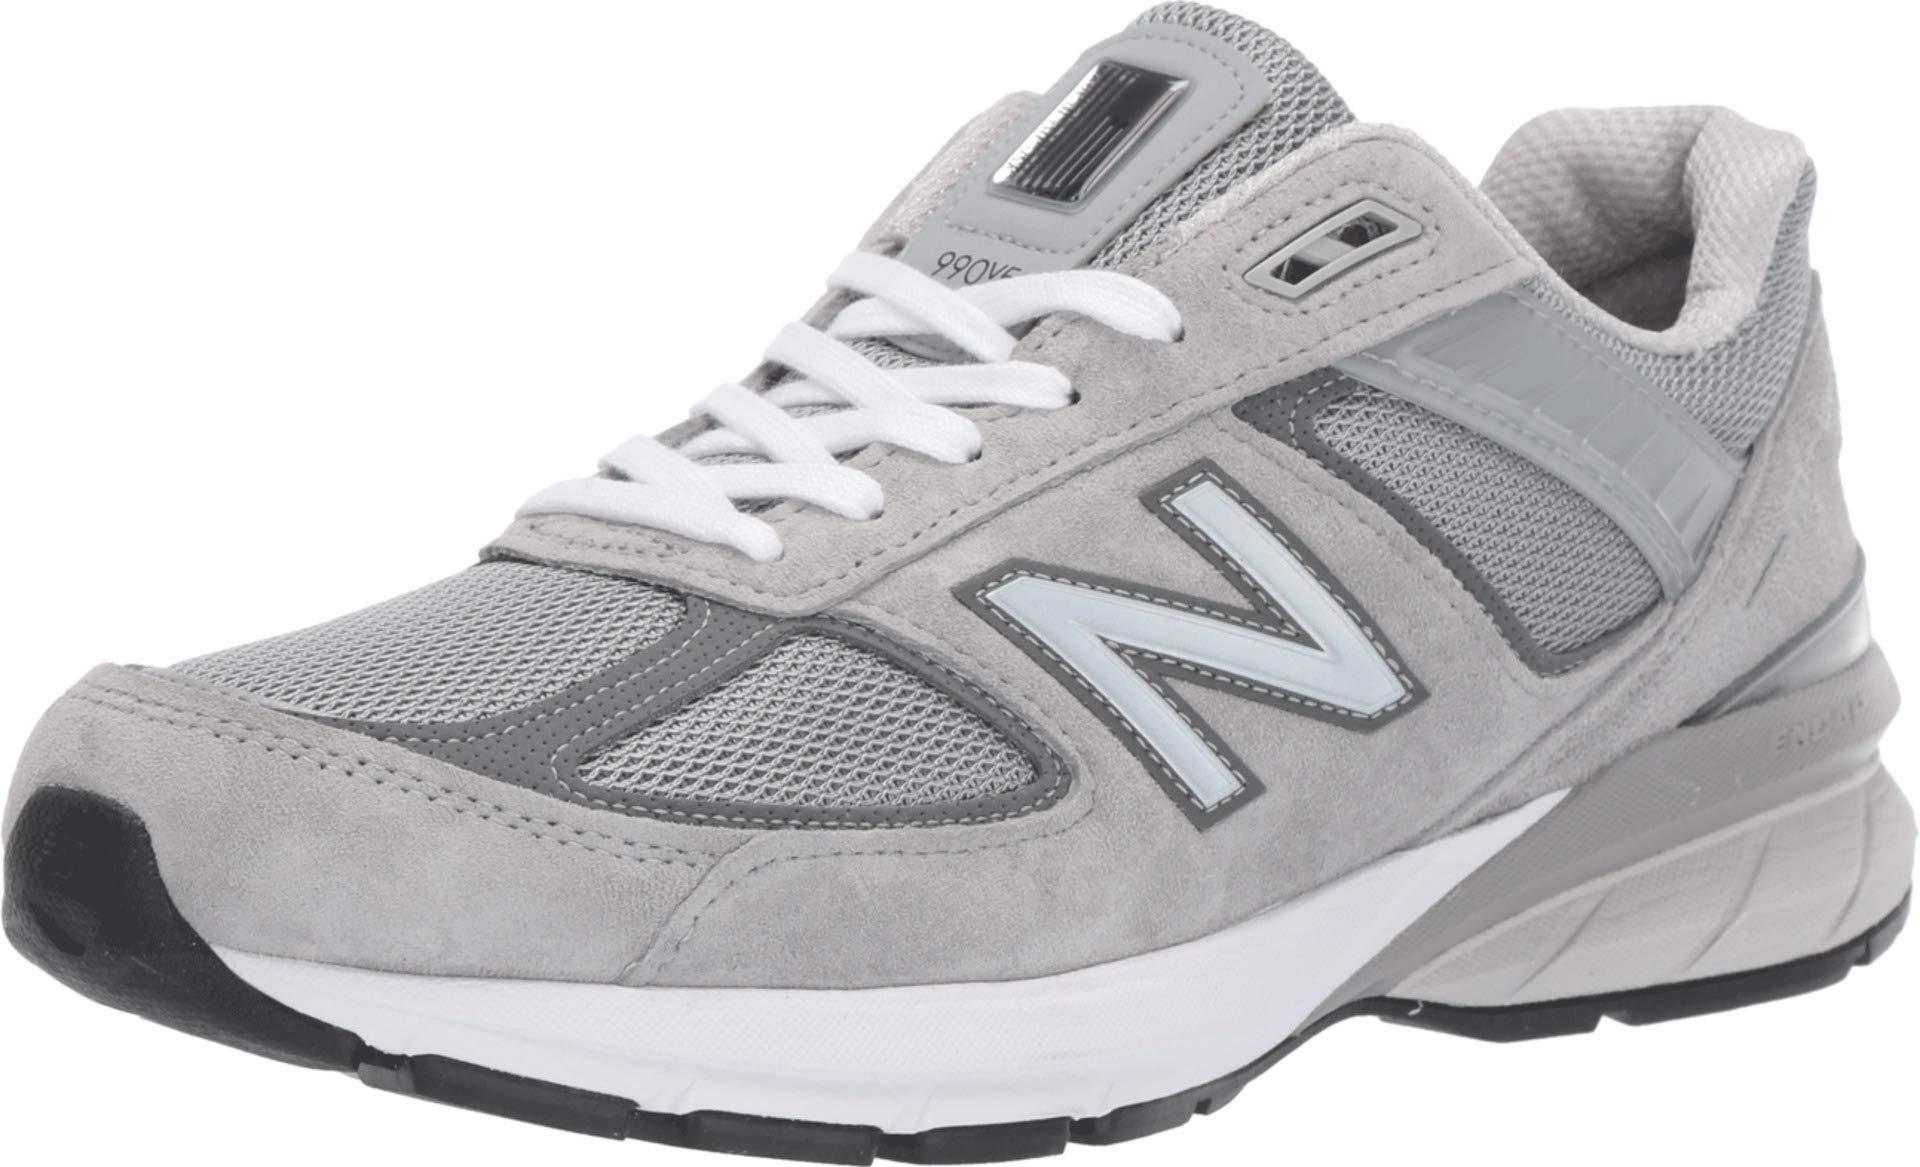 New Balance Mens Made in US 990 V5 Sneaker, greycastlerock, 125